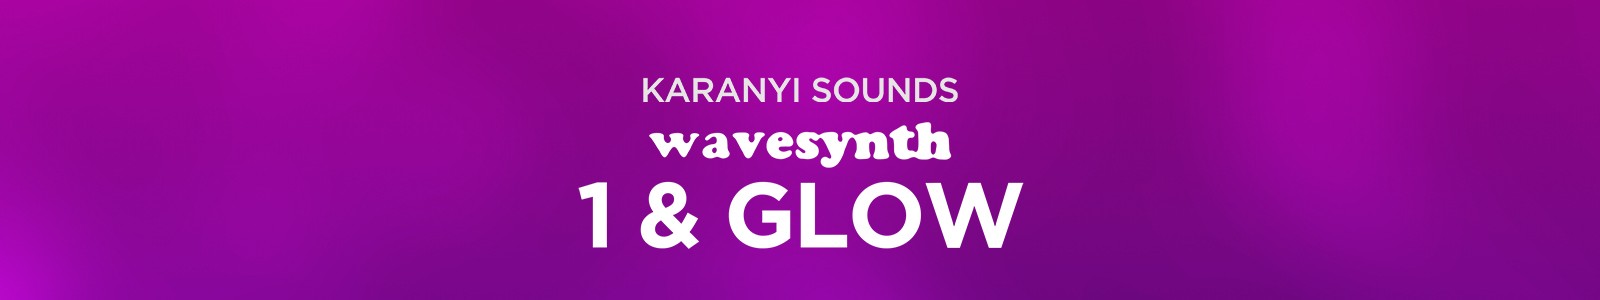 Wavesynth Pro Bundle by Karanyi Sounds